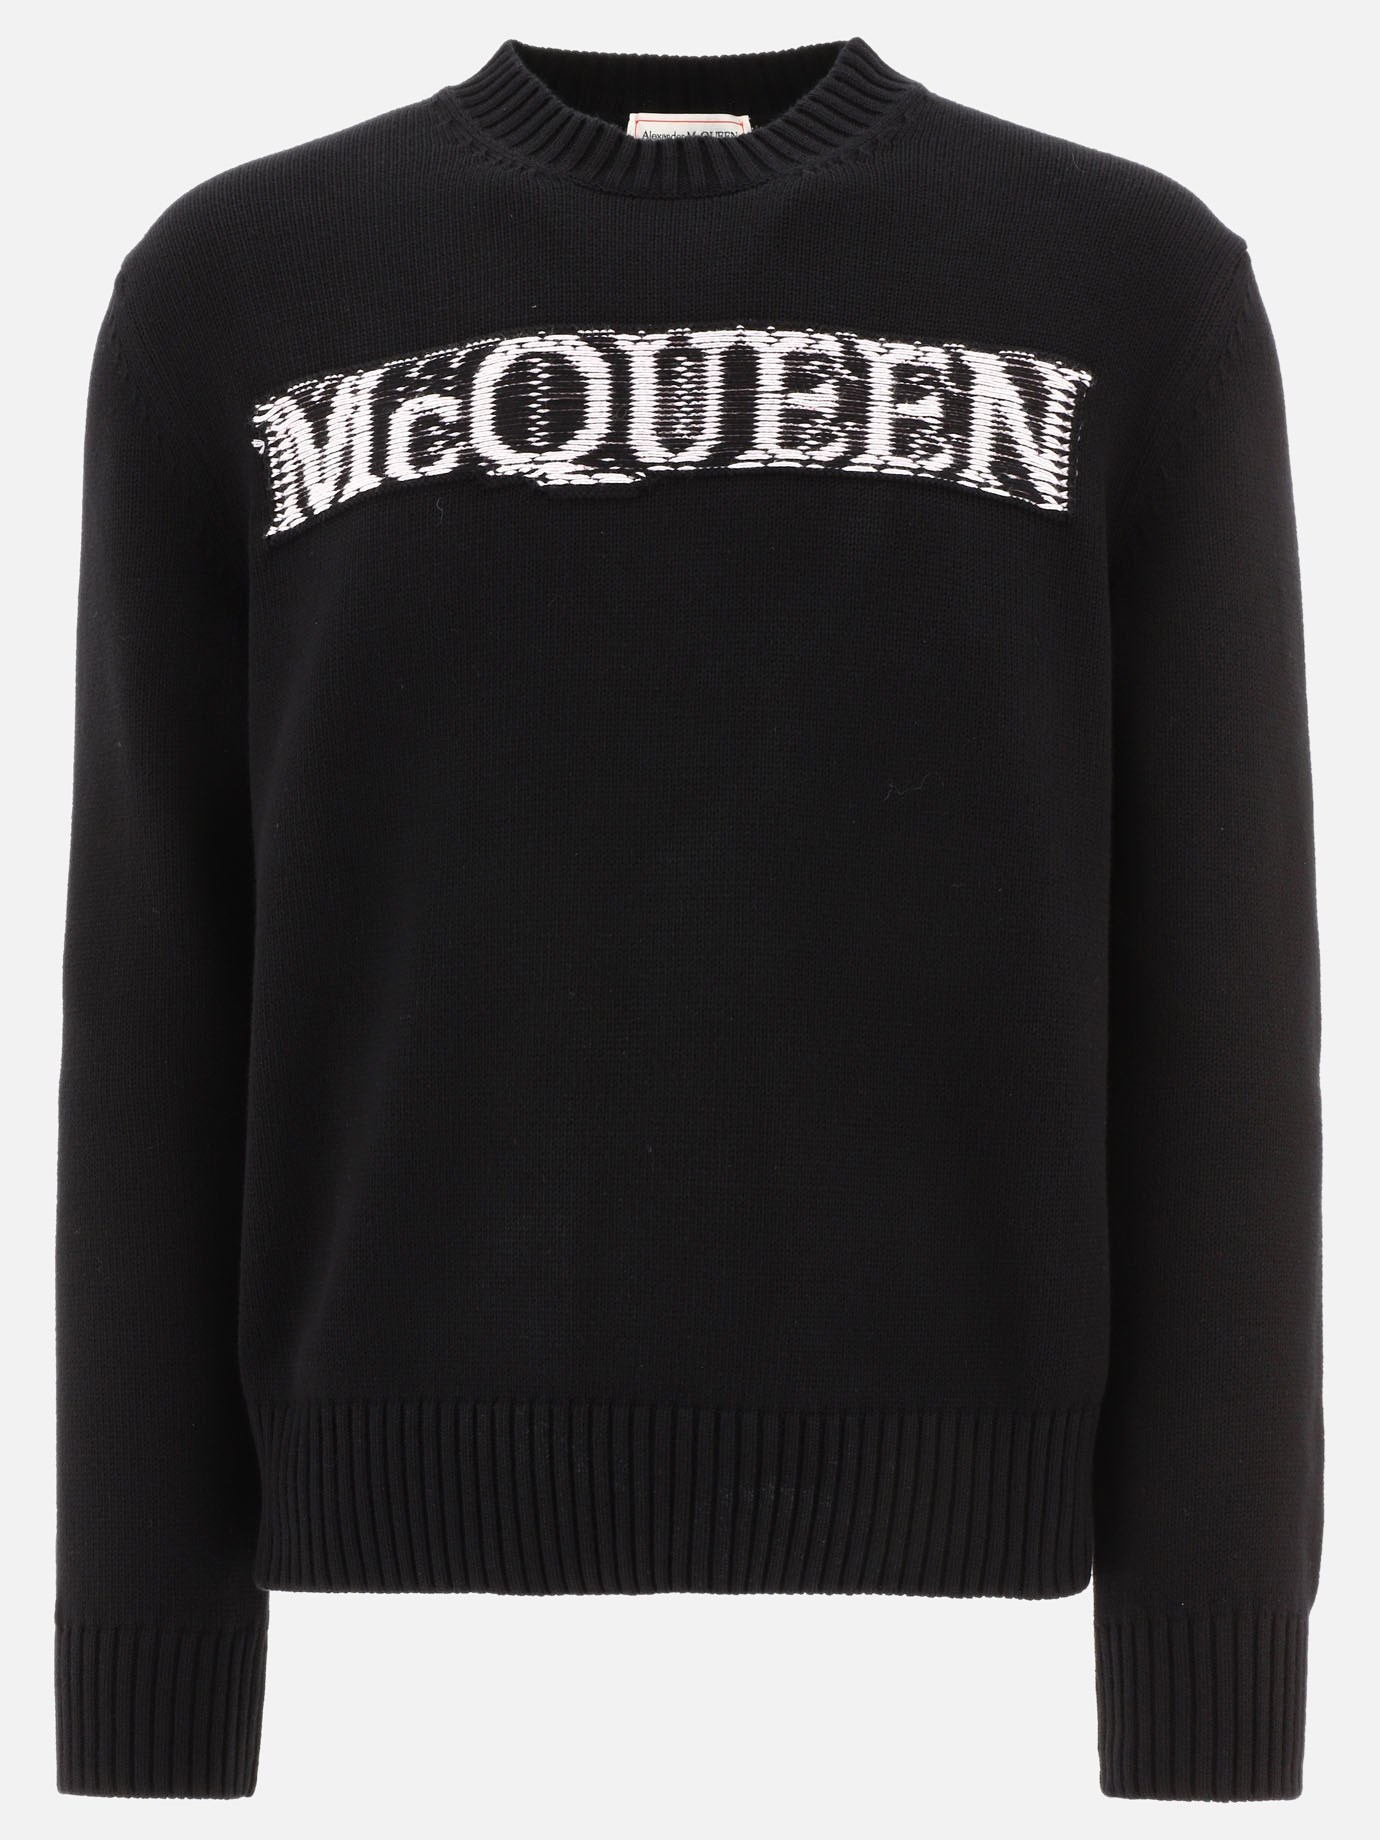 Intarsia sweater by Alexander McQueen